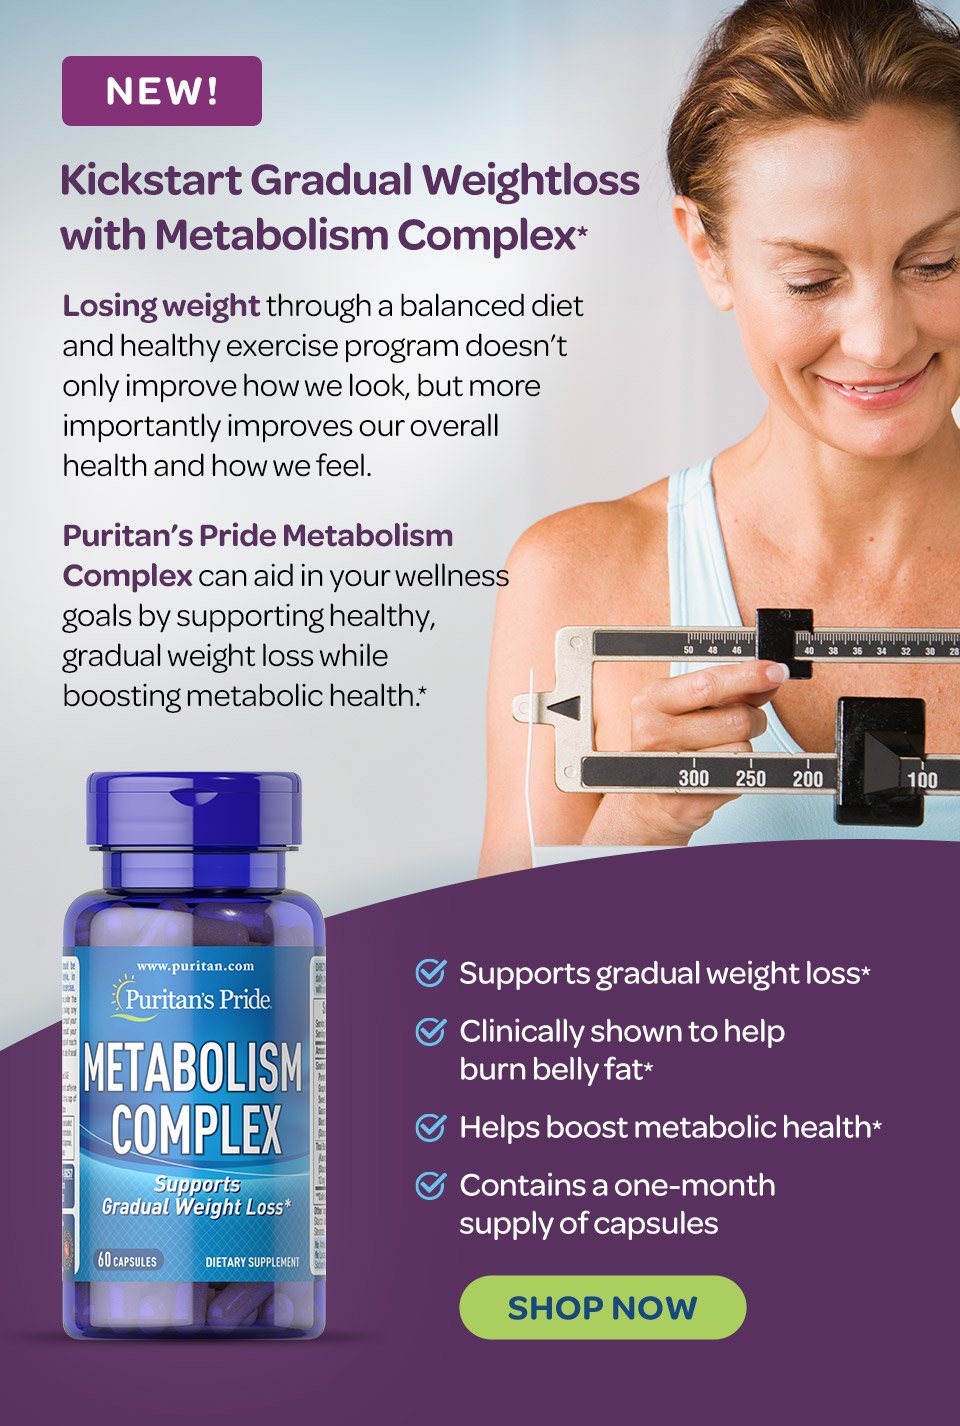 New: Metabolism Complex*. Shop now.